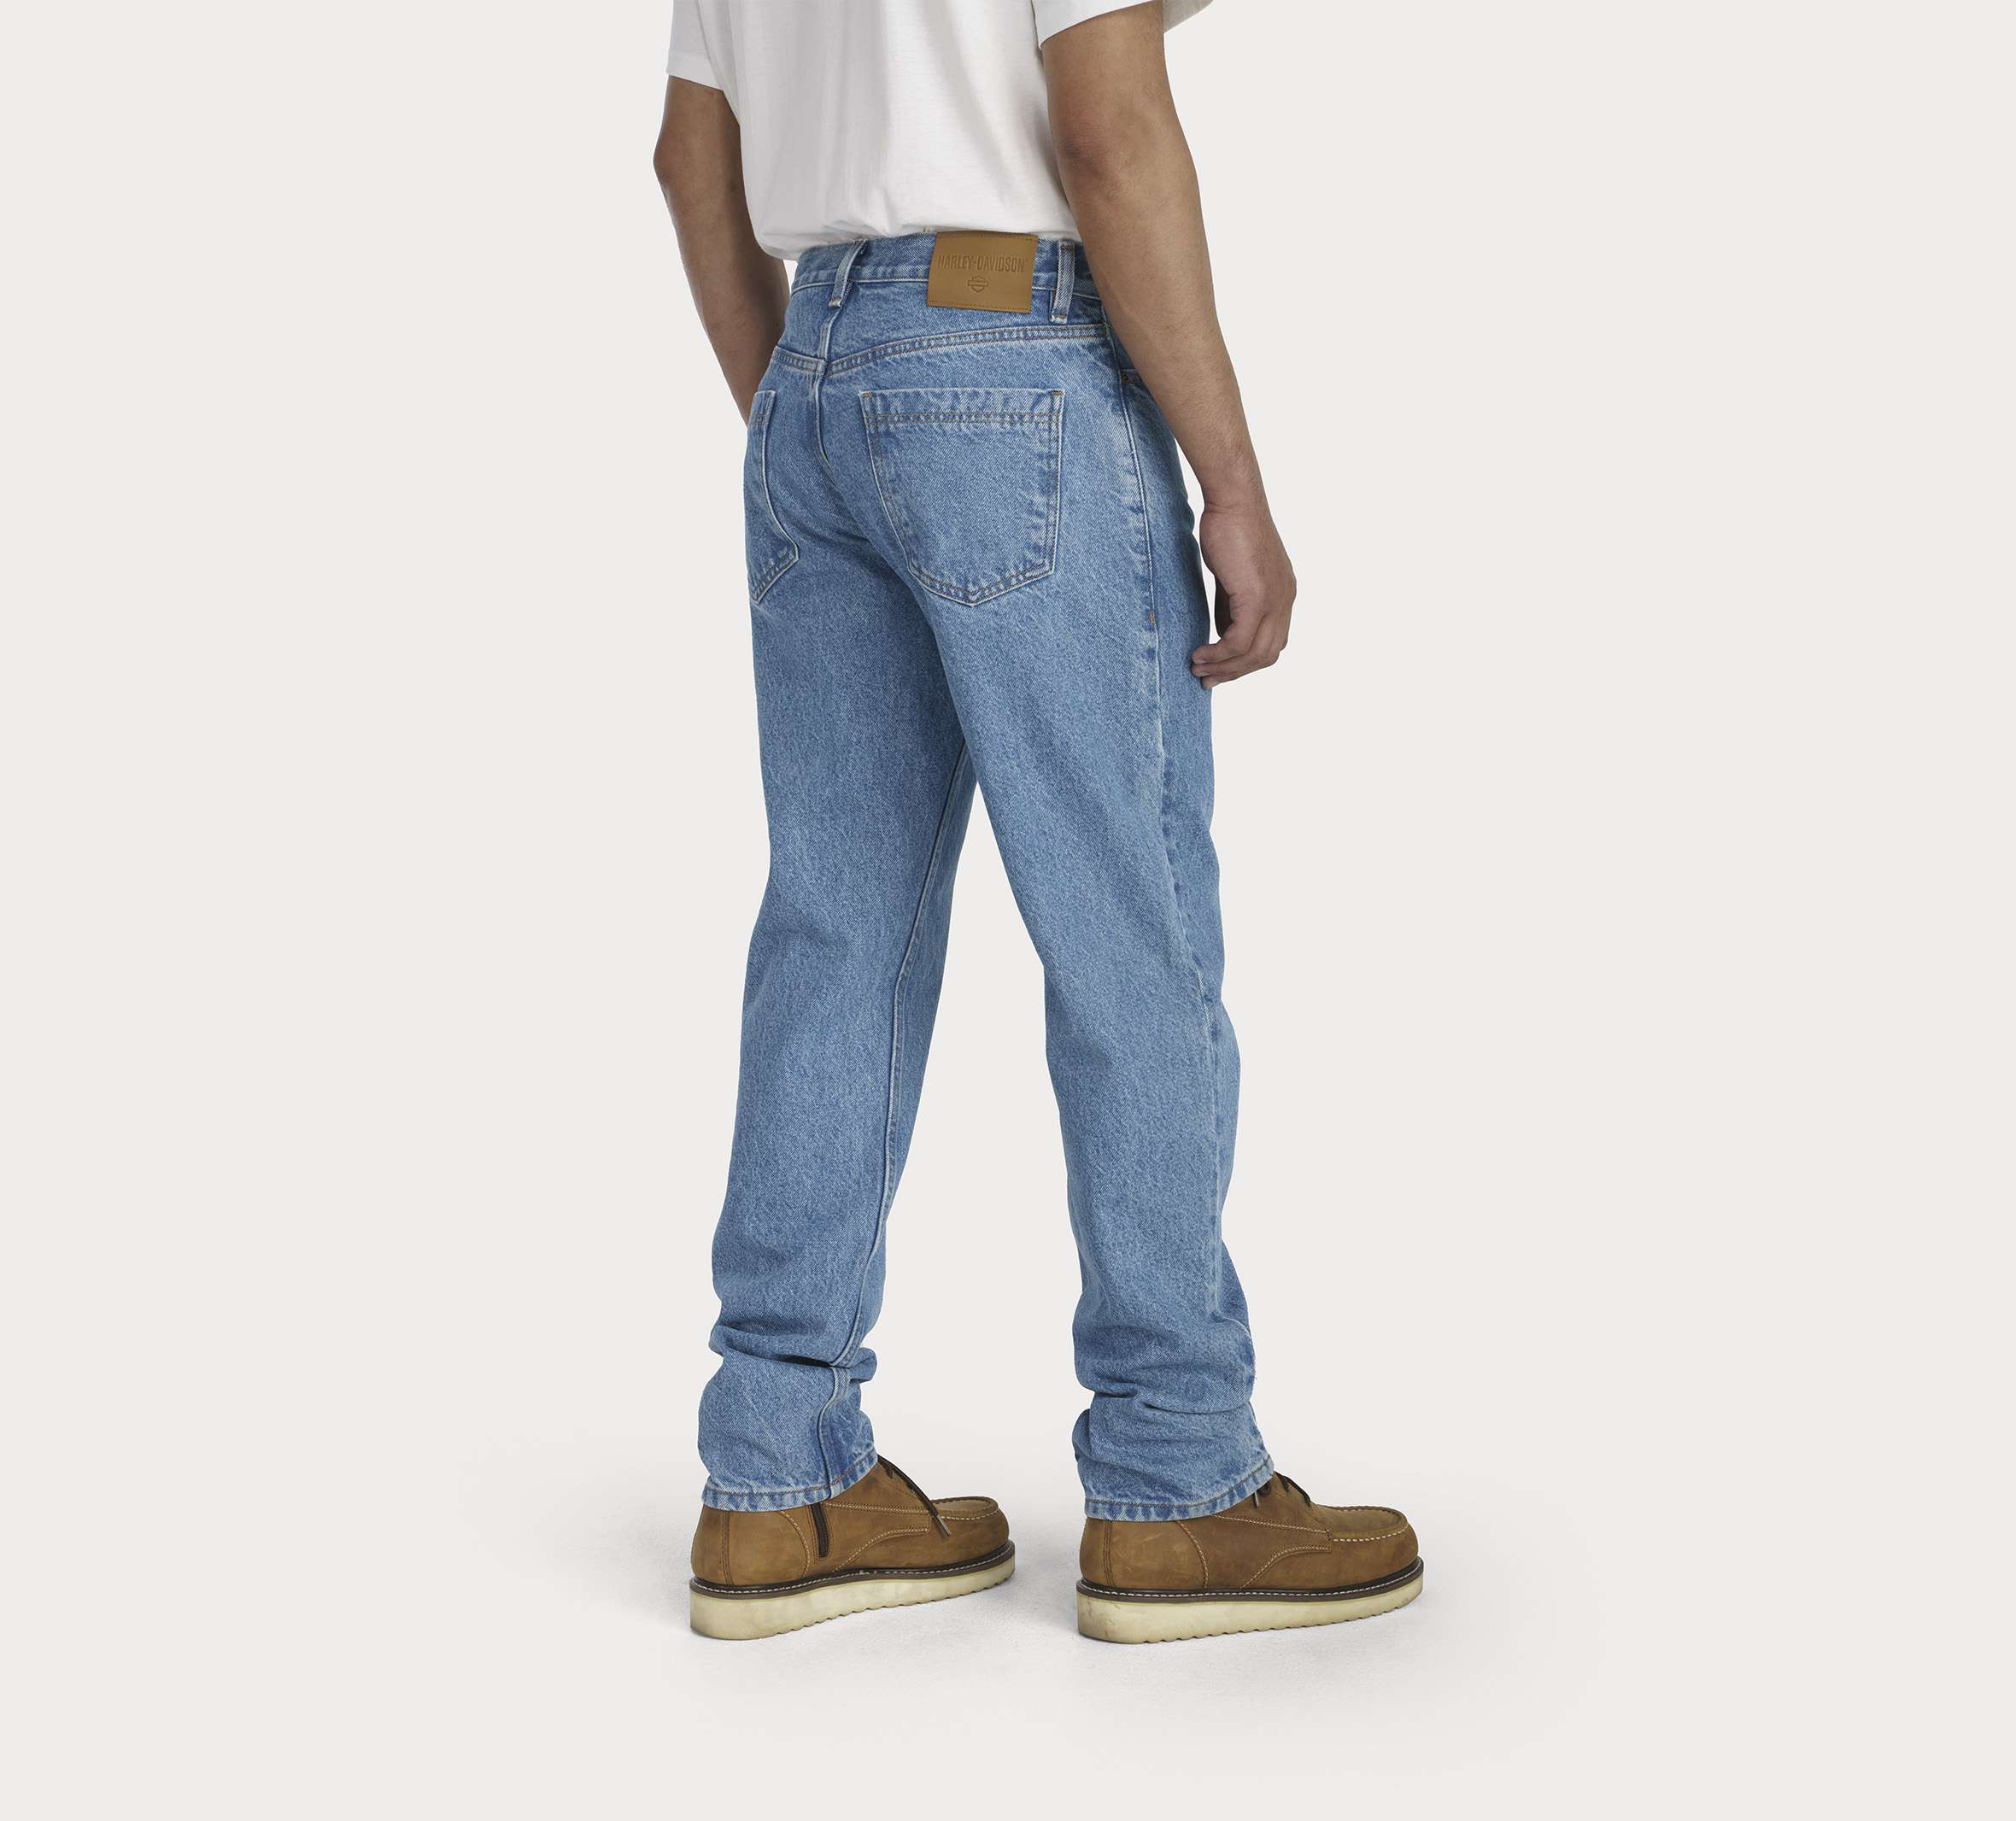 Buy Twill Regular Fit Jeans Online | Merchant Marine